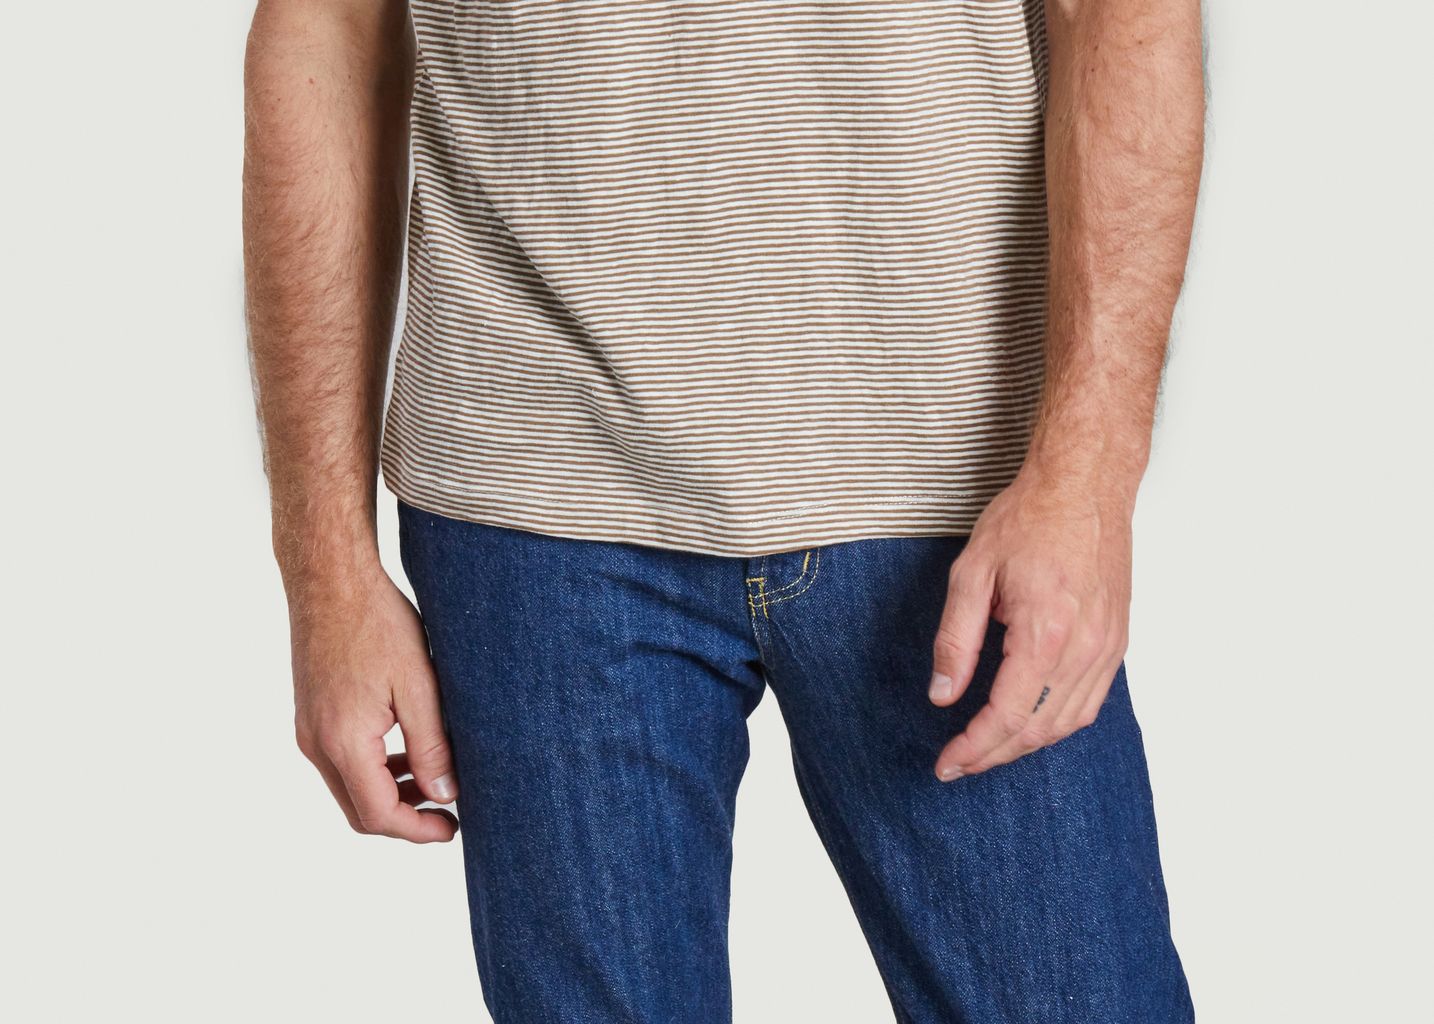 Striped organic cotton T-shirt - KCA